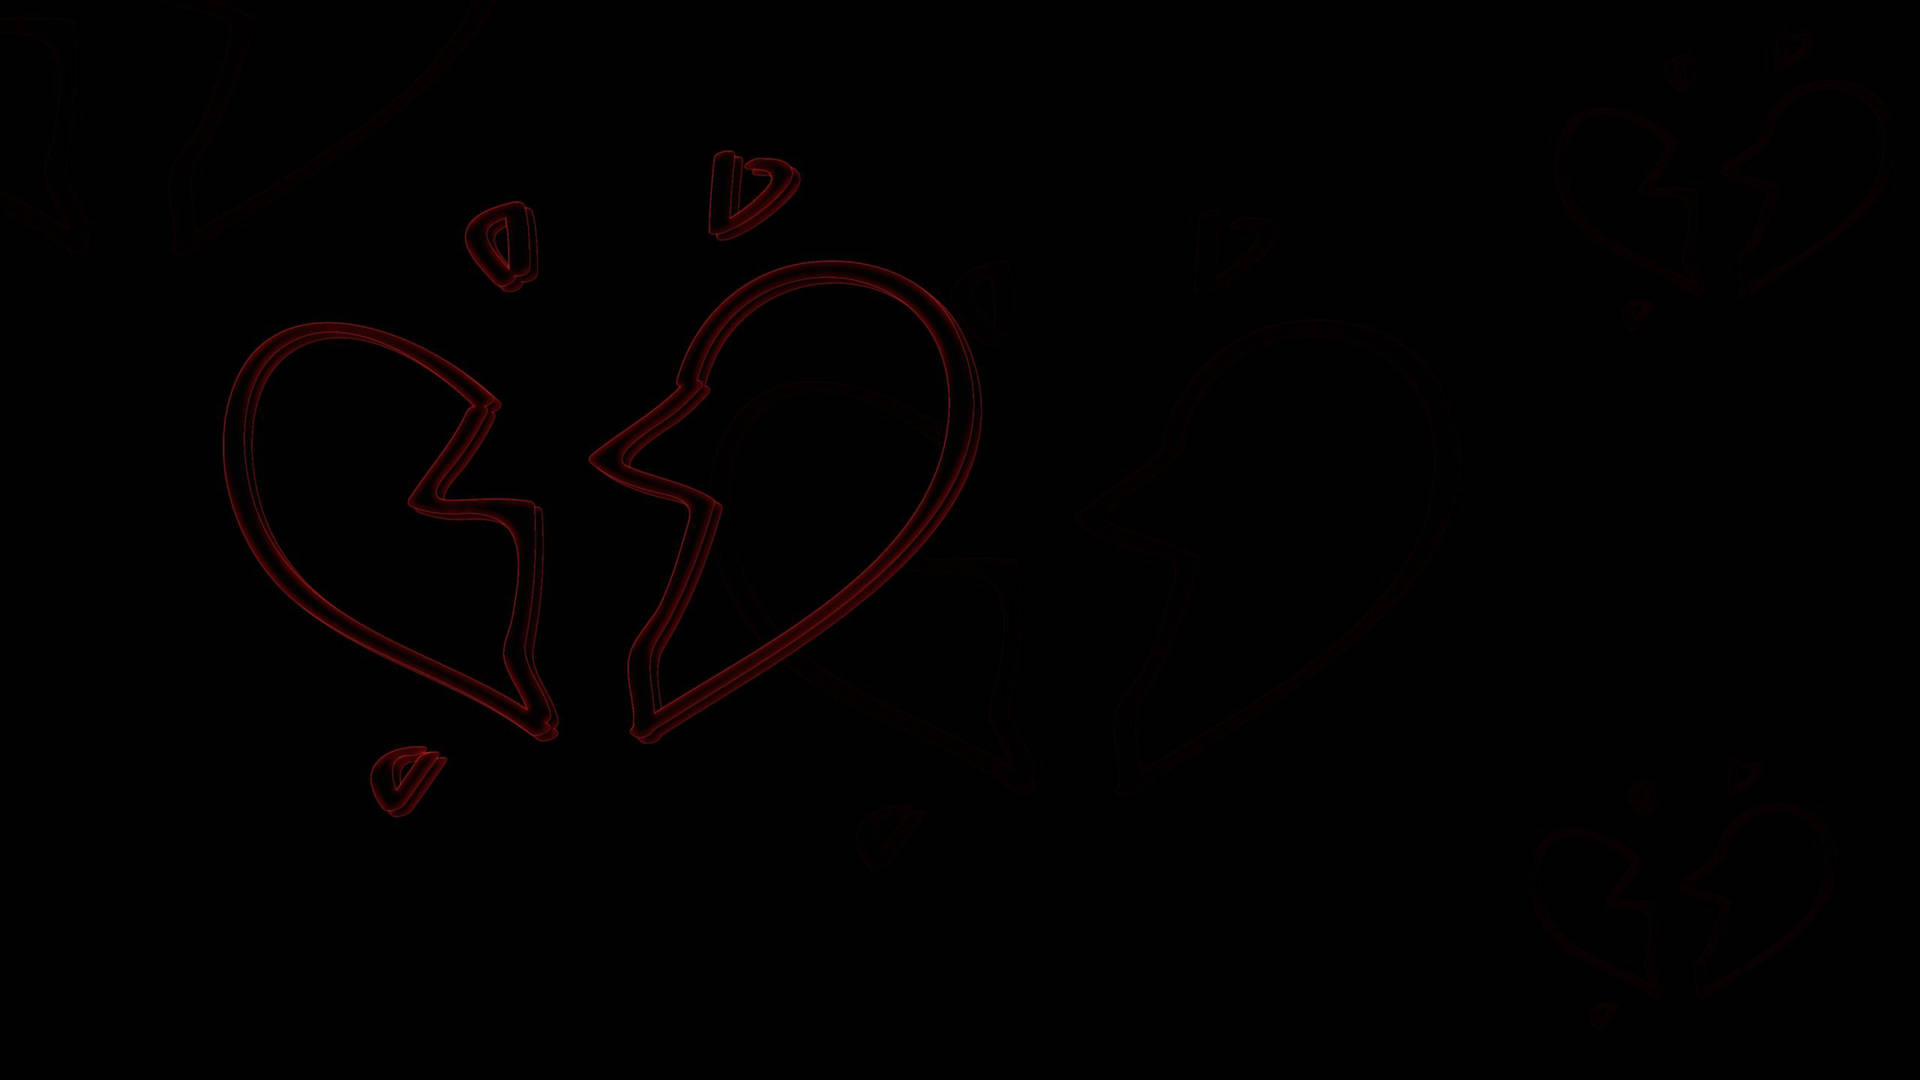 Corazónroto De Color Rojo Oscuro En Resolución 4k. Fondo de pantalla